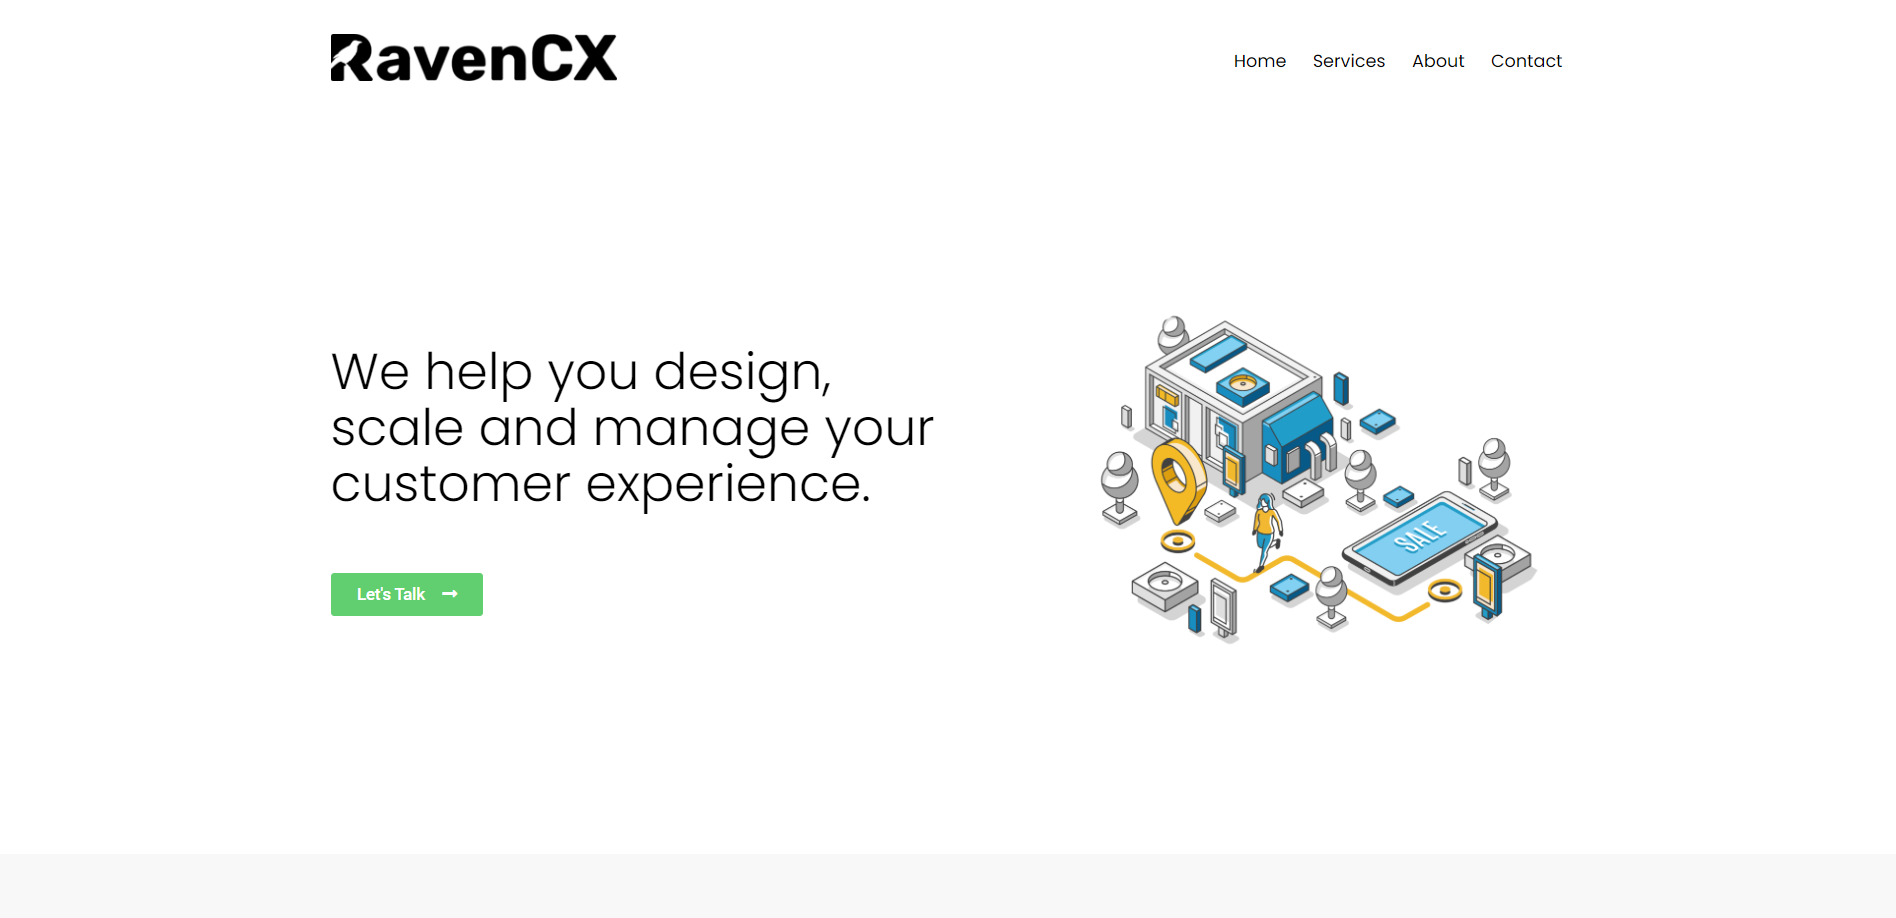 RavenCX brand and website